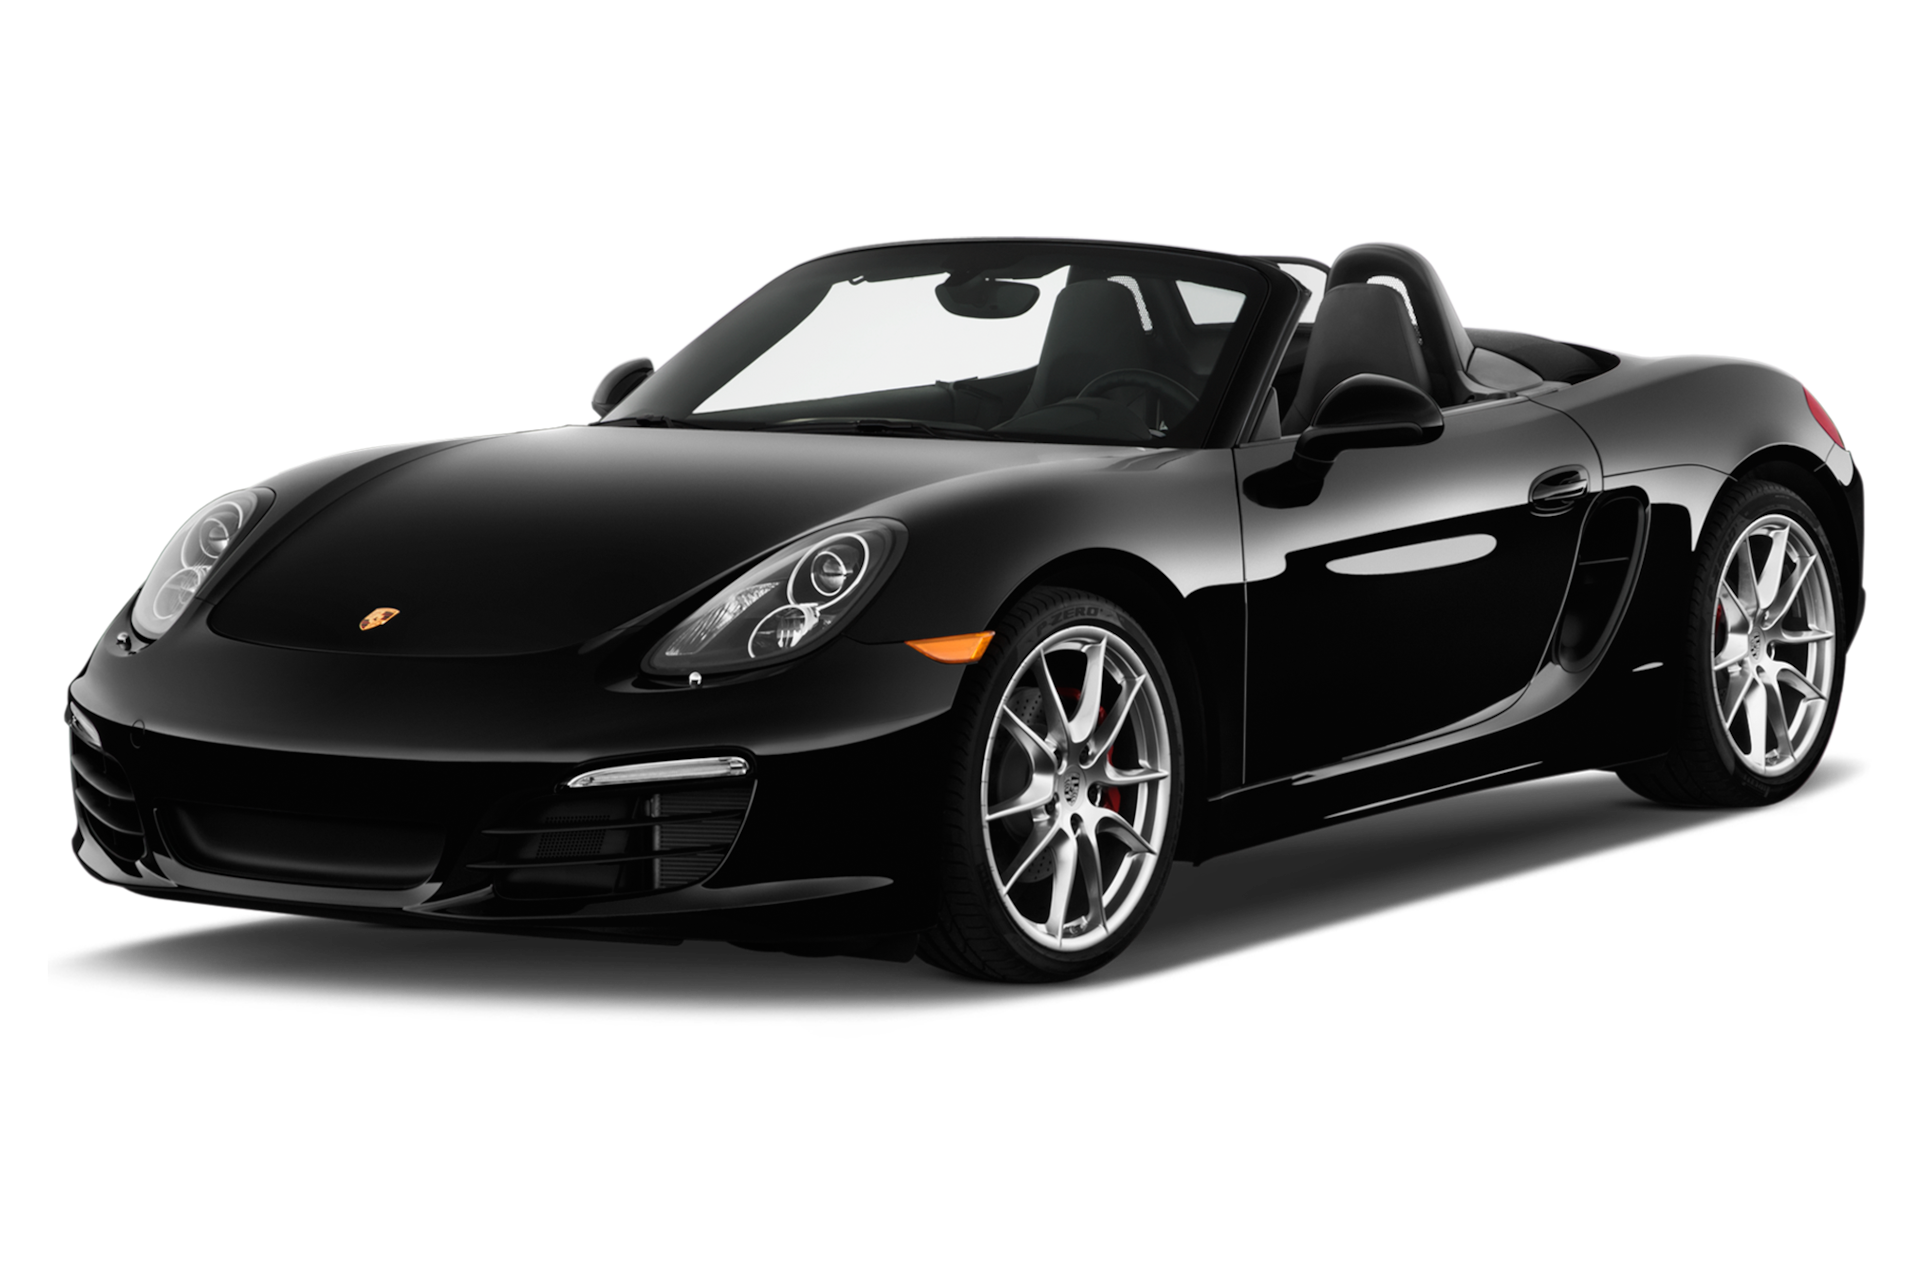 2013 Porsche Boxster Prices, Reviews, and Photos - MotorTrend